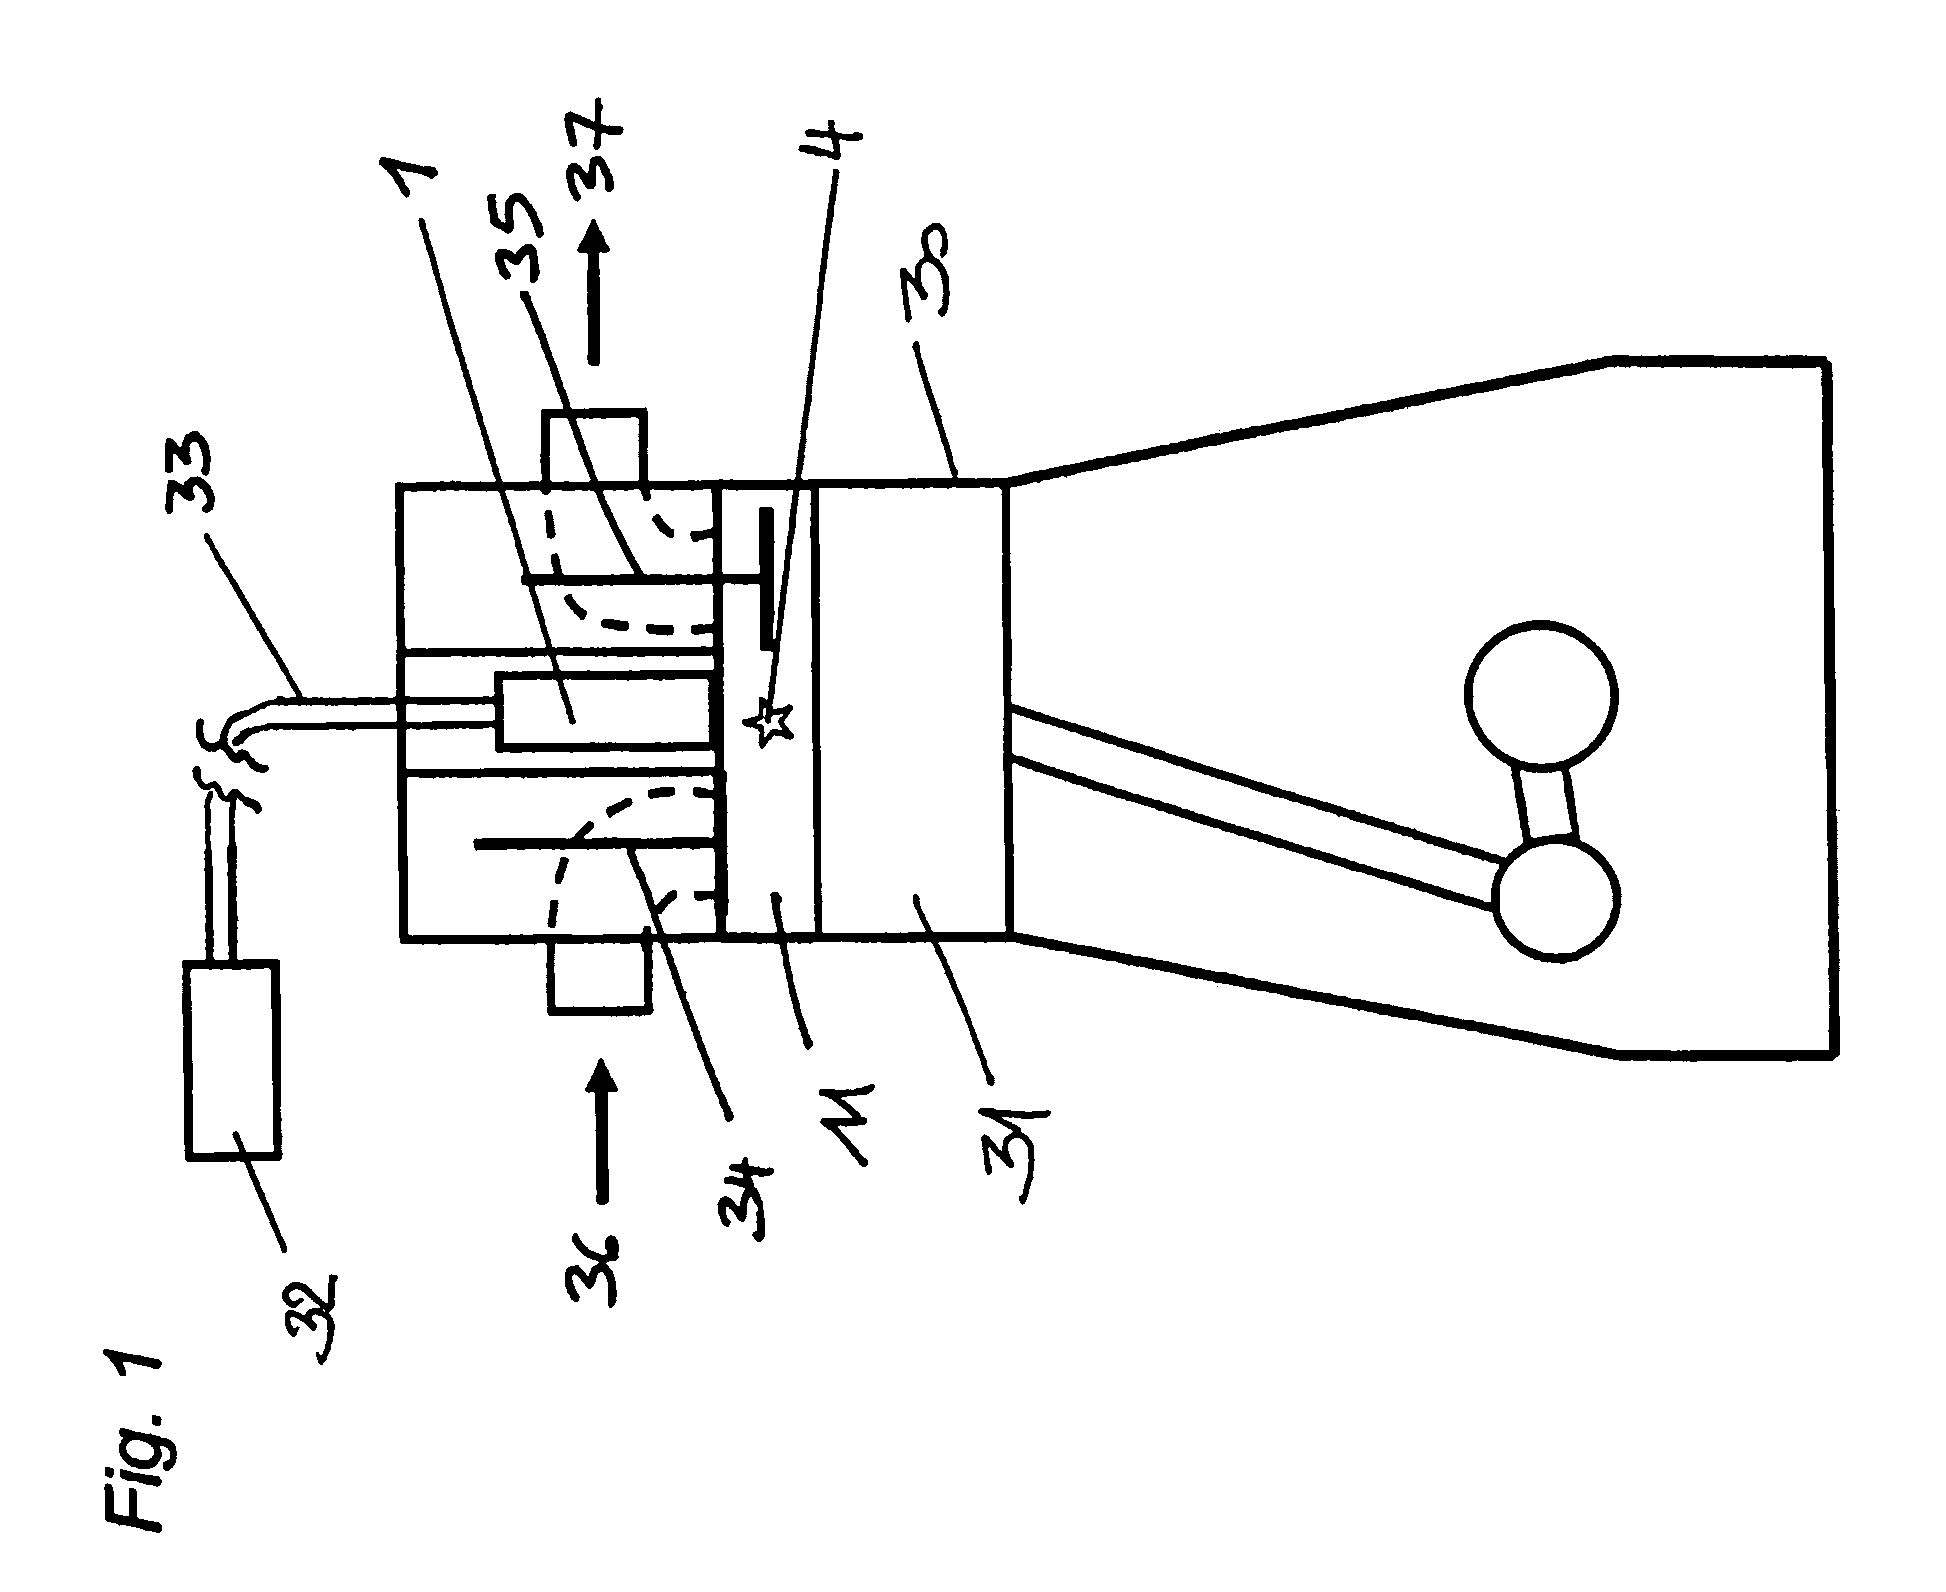 Laser ignition apparatus